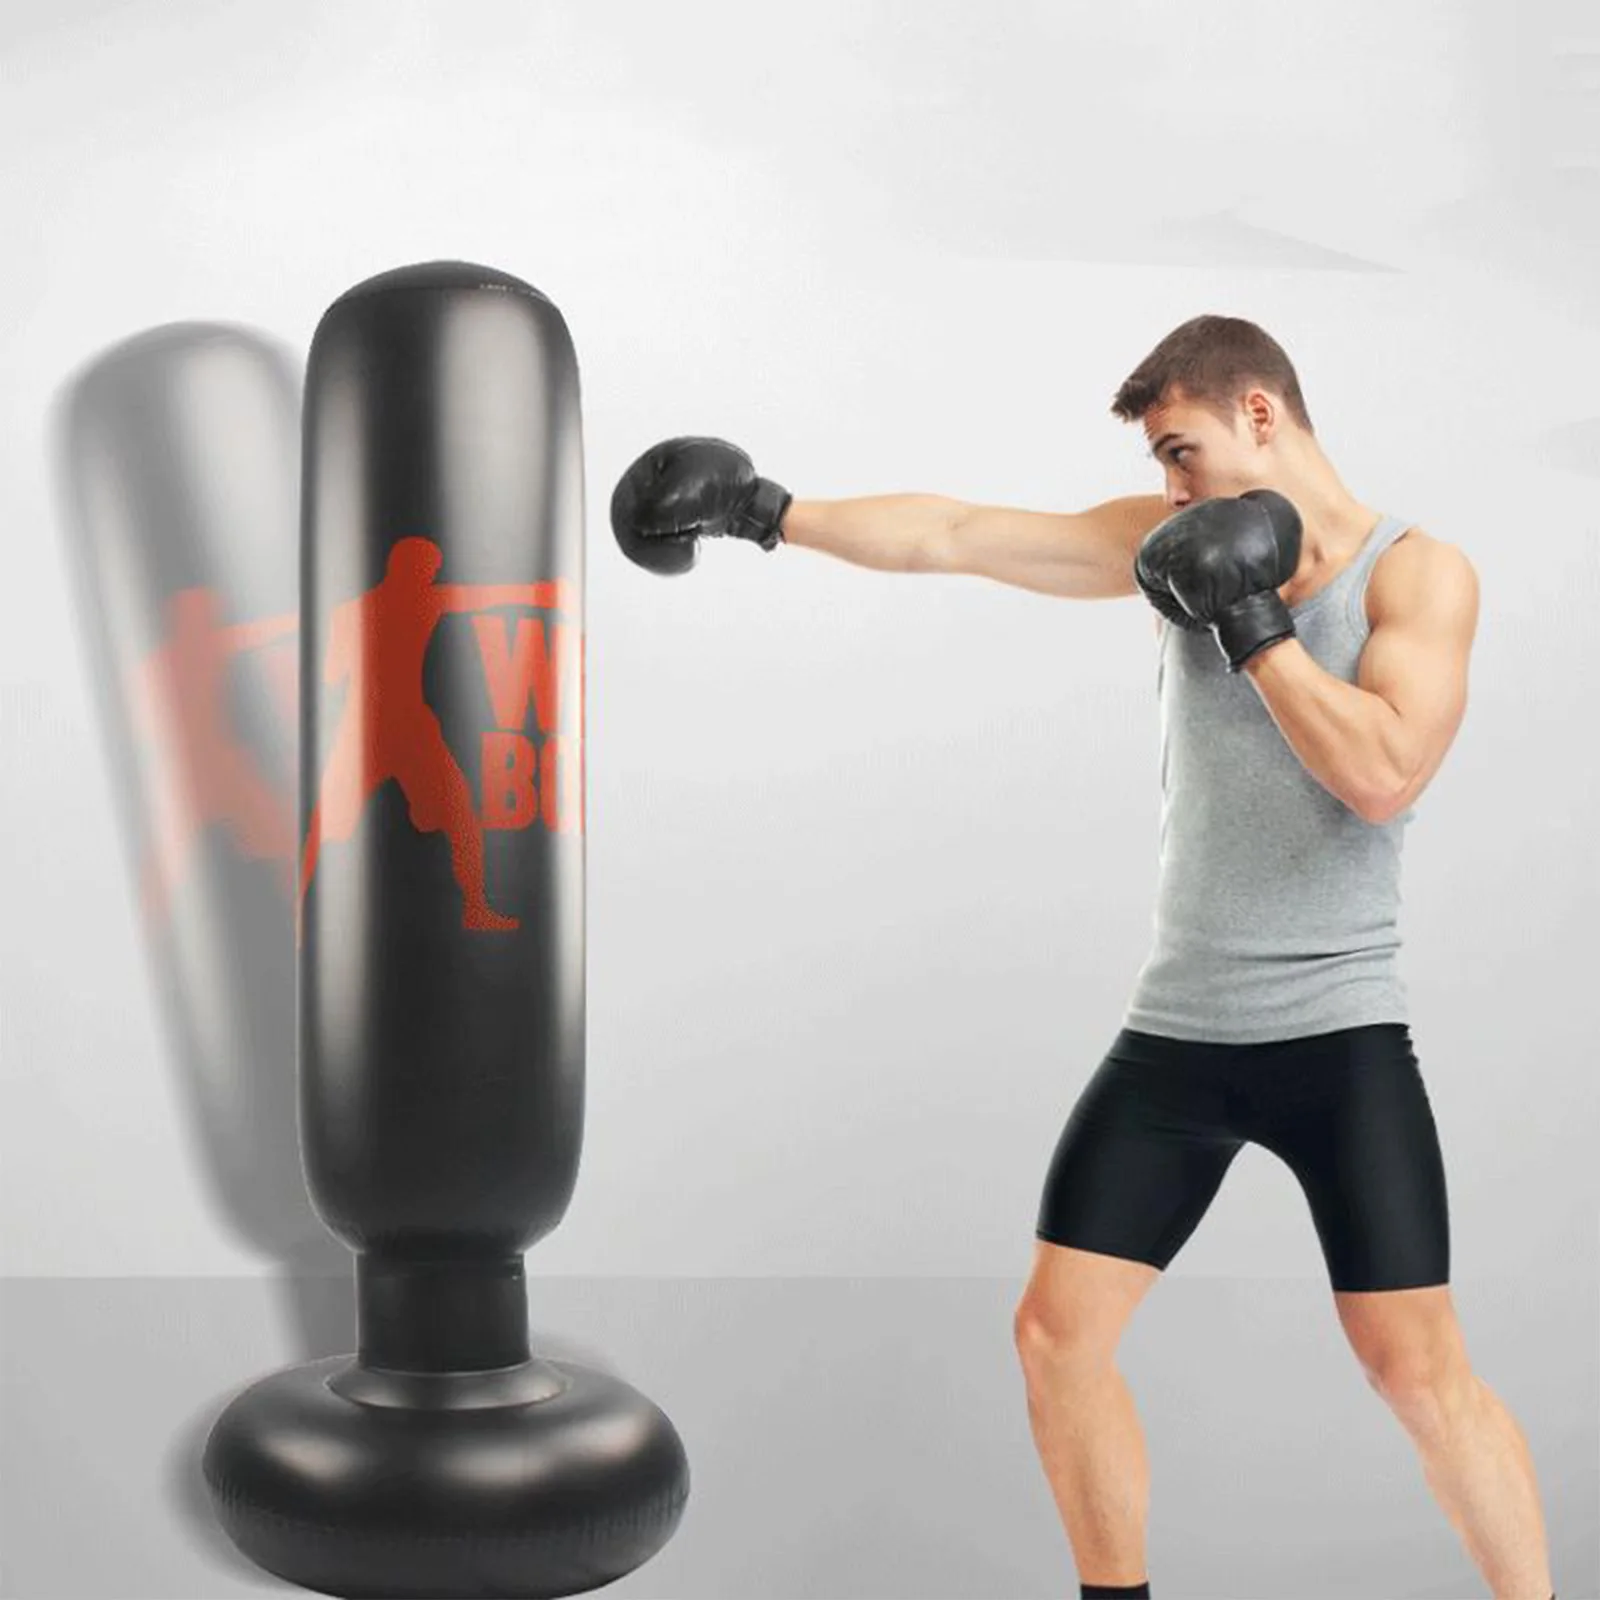 63 Inch Punching Bag Adult Kids Column Tumbler Kicking Sandbag PVC Sport Gym Training Equipment Stress Relief